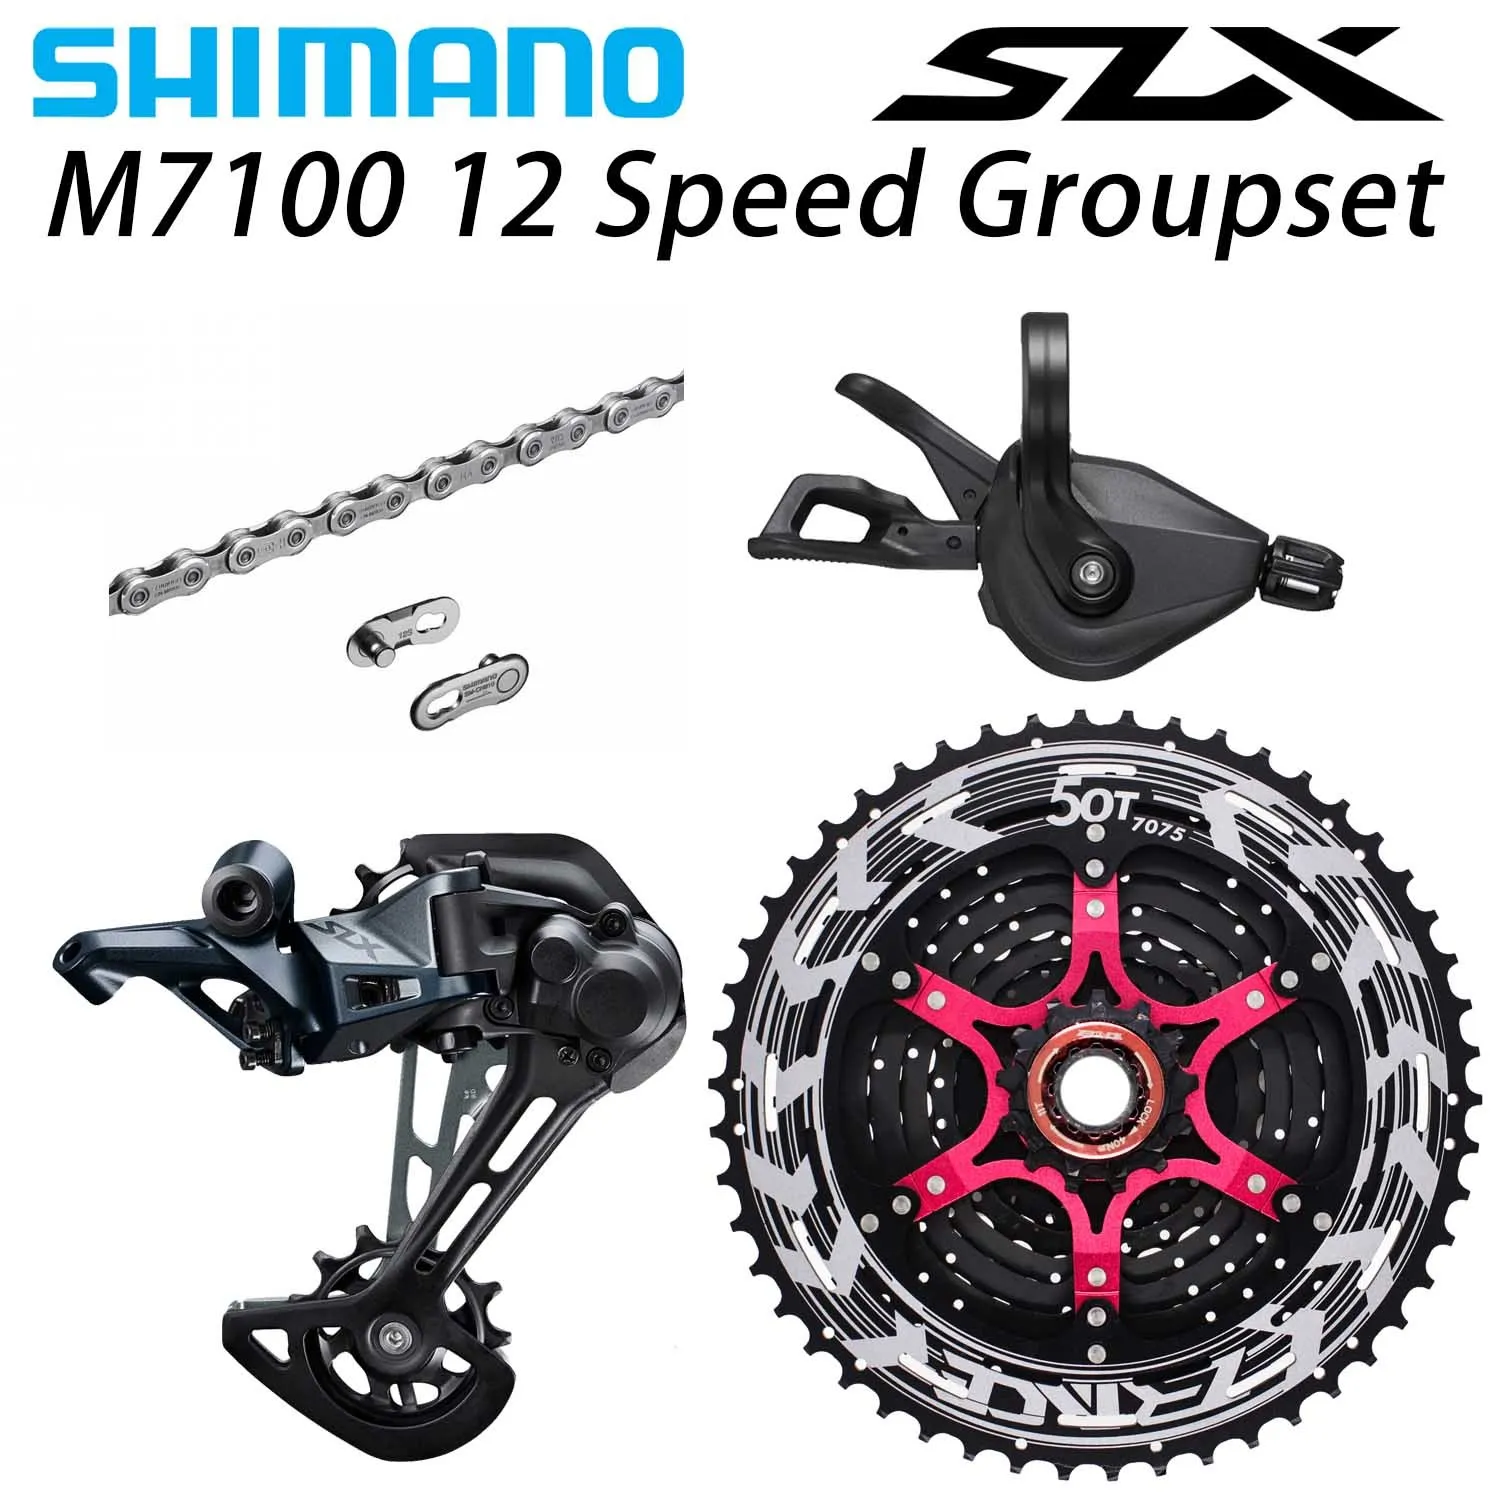 SHIMANO DEORE SLX M7100 комплект горного велосипеда MTB 1x12-Speed 52T SL+ RD+ zracing+ KMC X12 M7100 переключатель заднего хода - Цвет: M7100 Chain 11-50T